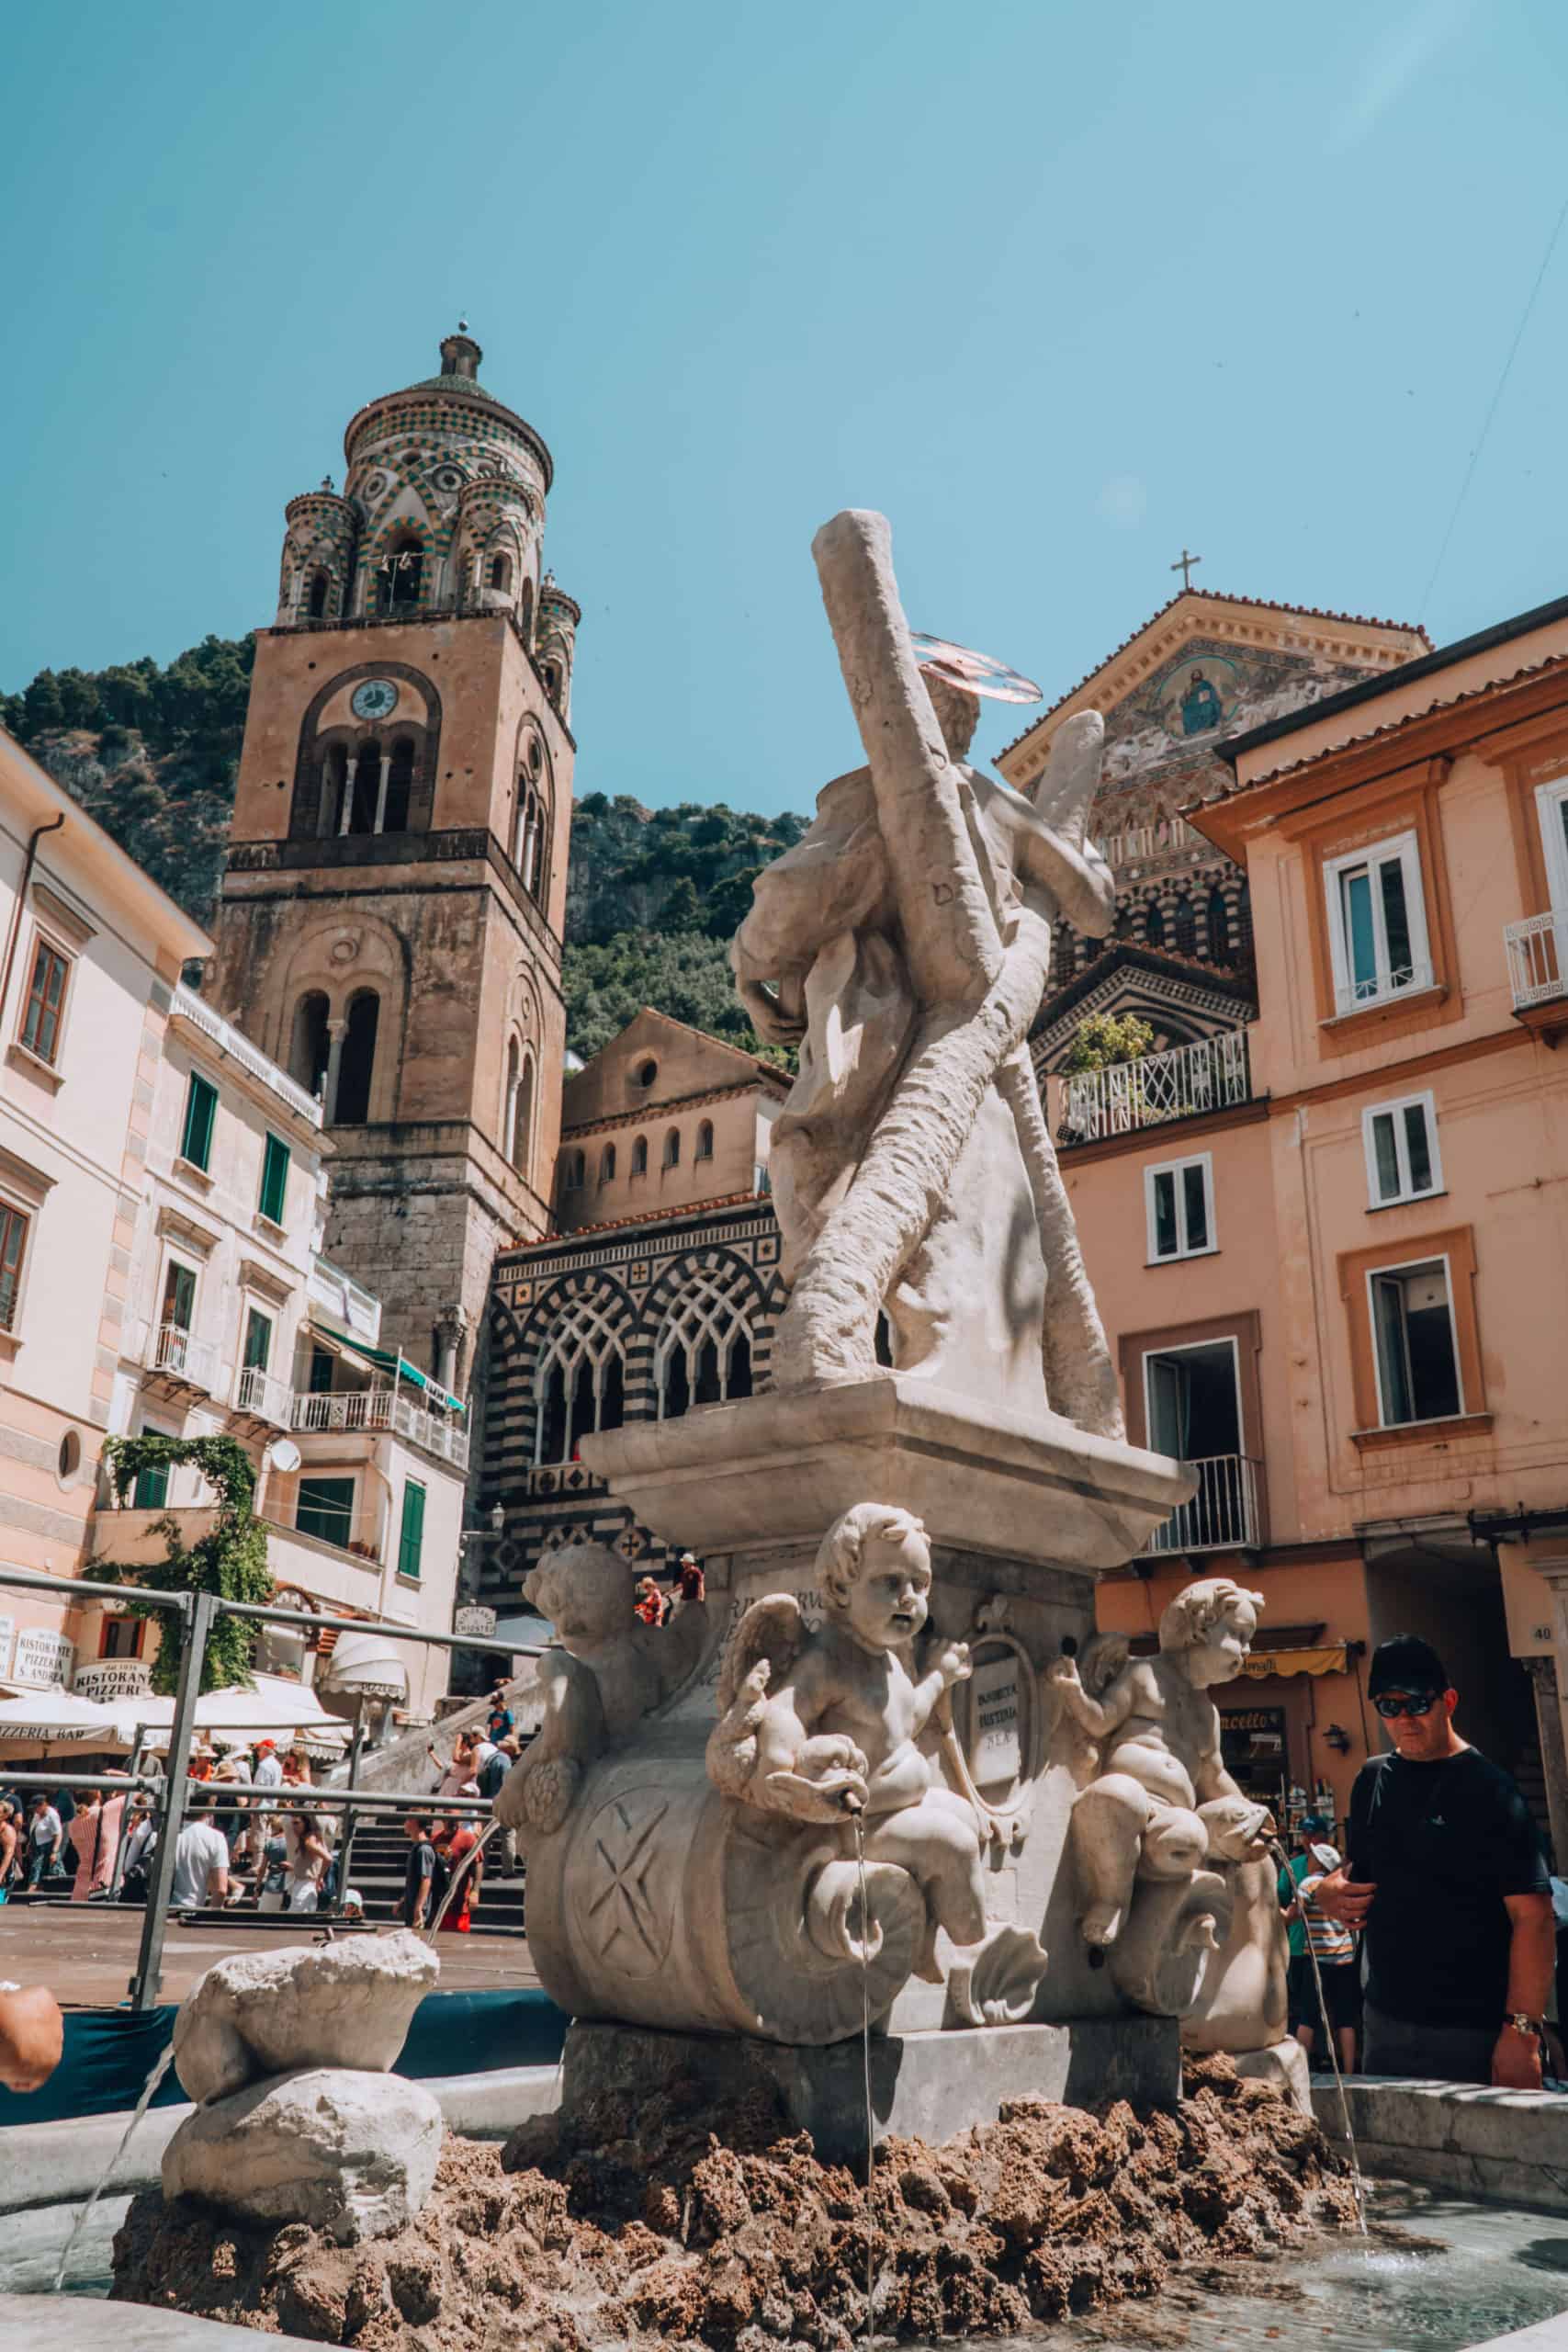 Piazza in Amalfi, Italy